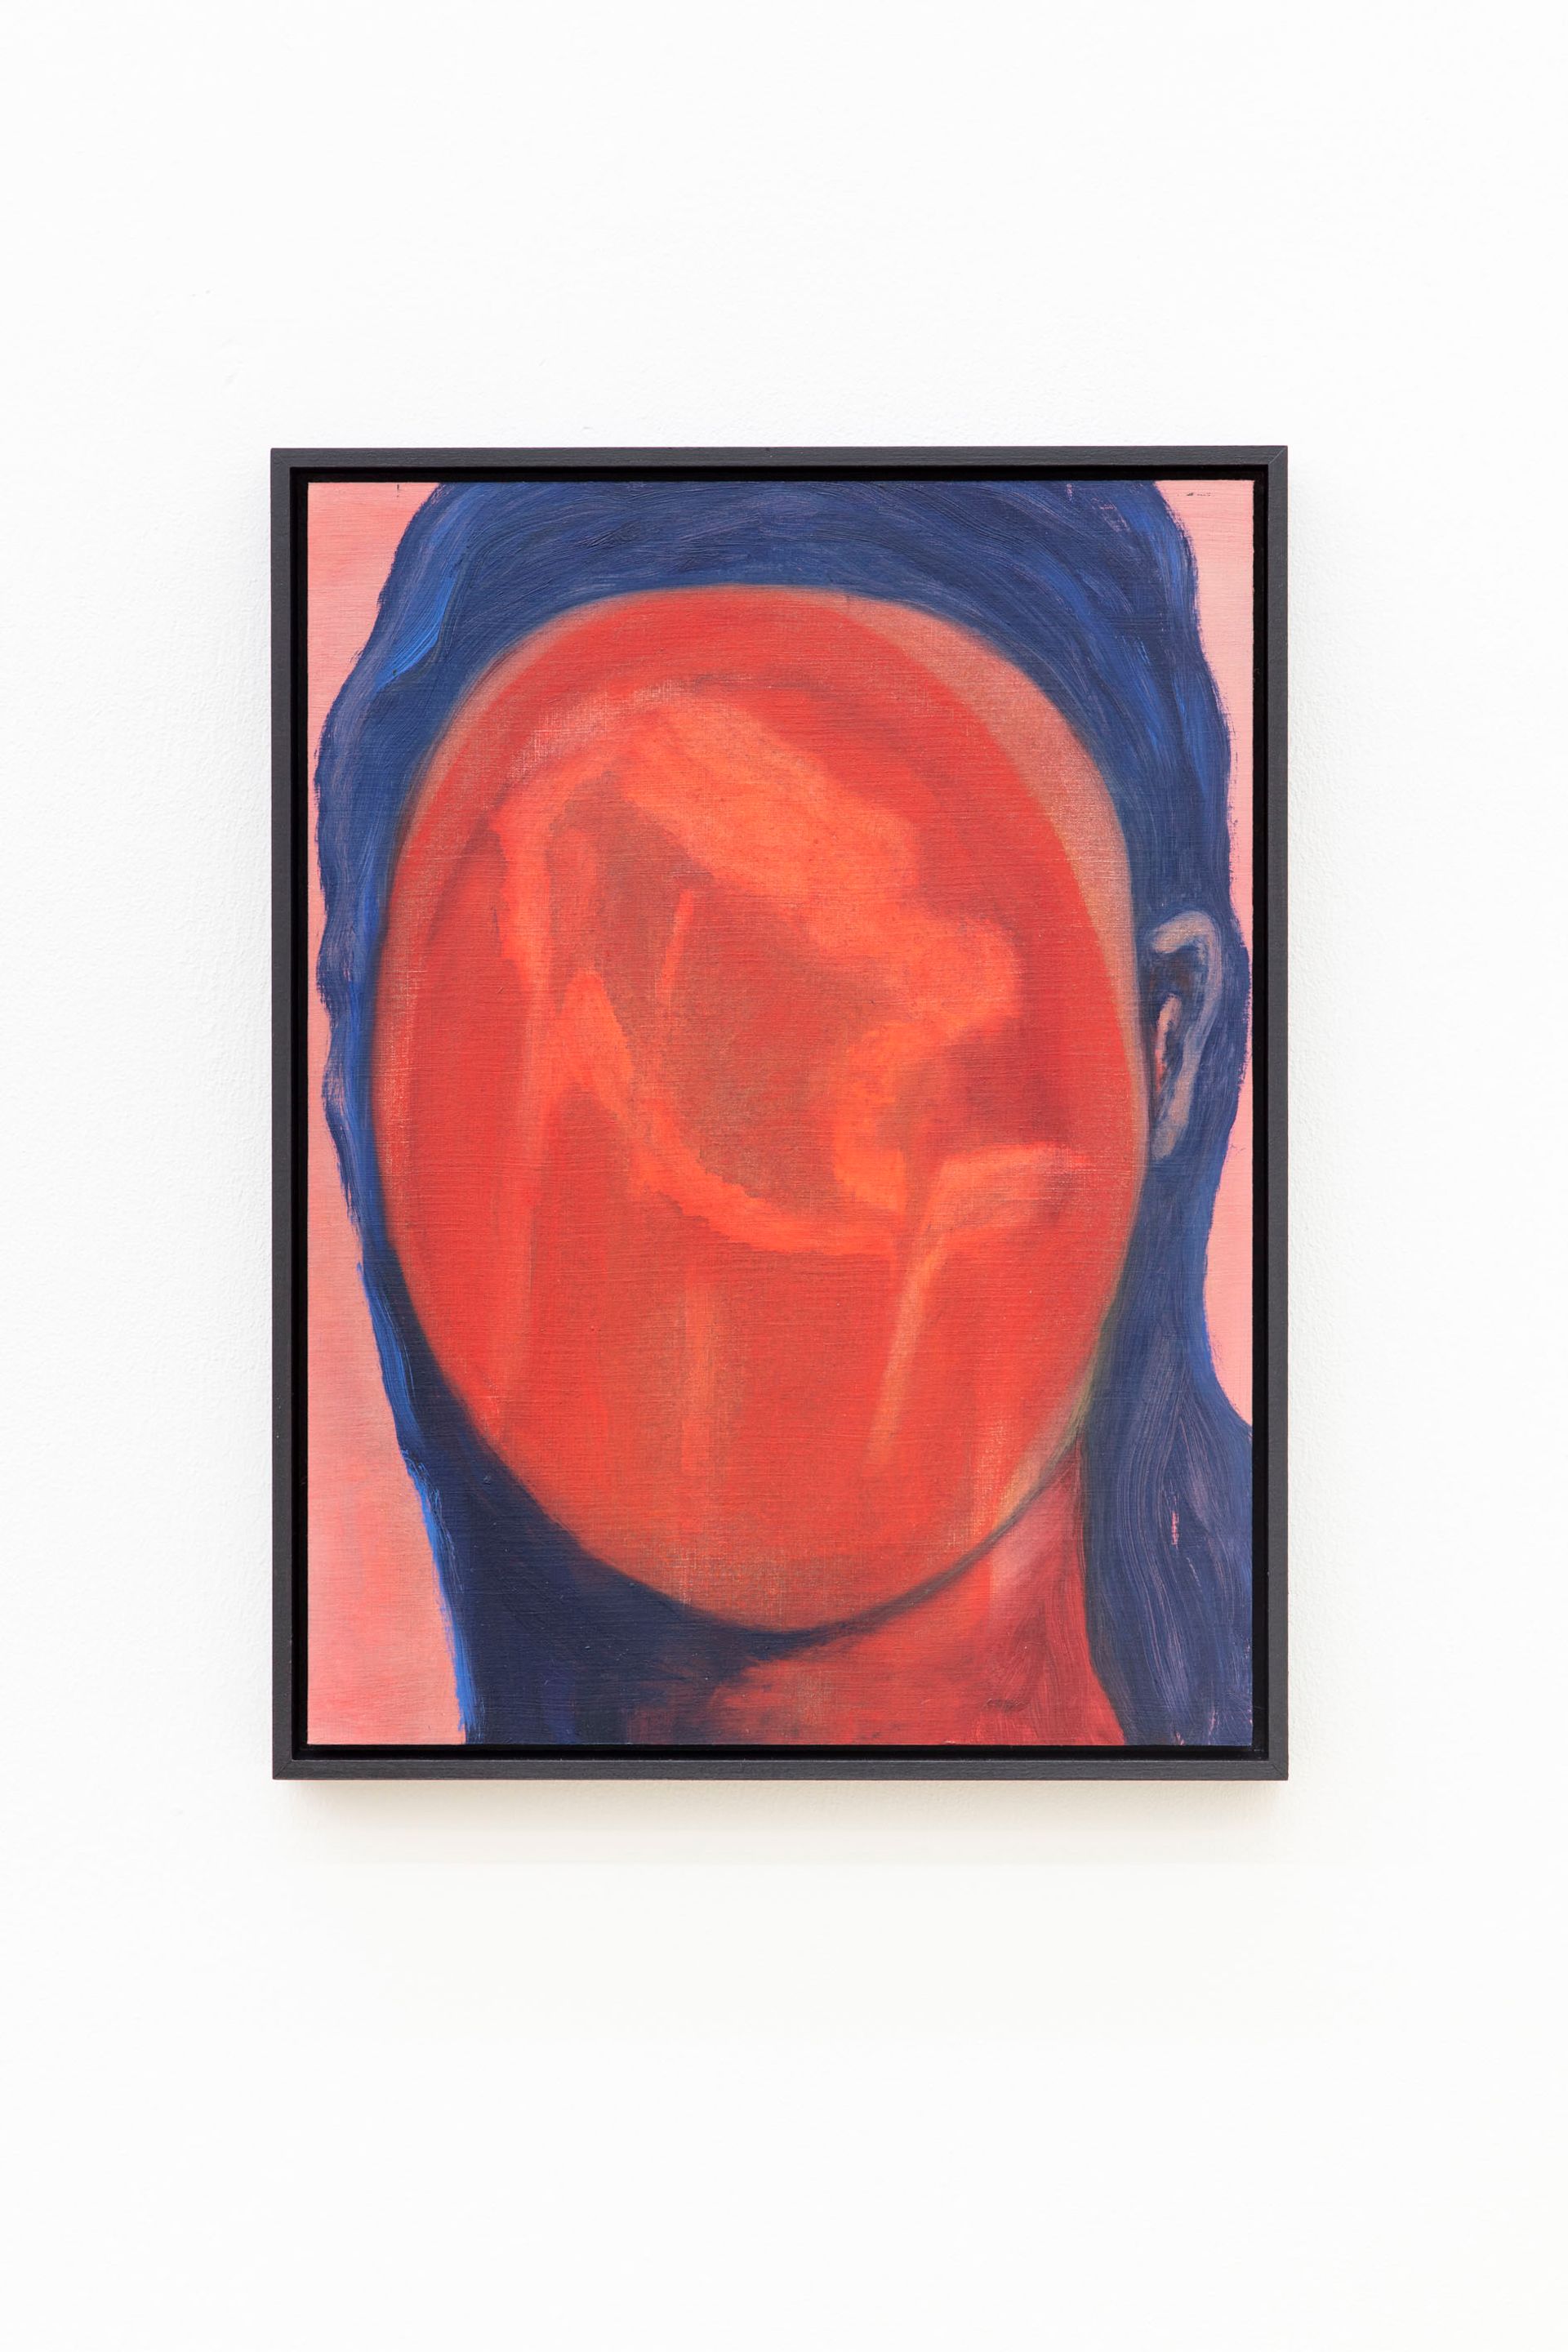 Veronika Hilger, Untitled, 2021, Oil on paper on MDF in artists frame, 39.6 x 29.6 cm photo: Sebastian Kissel